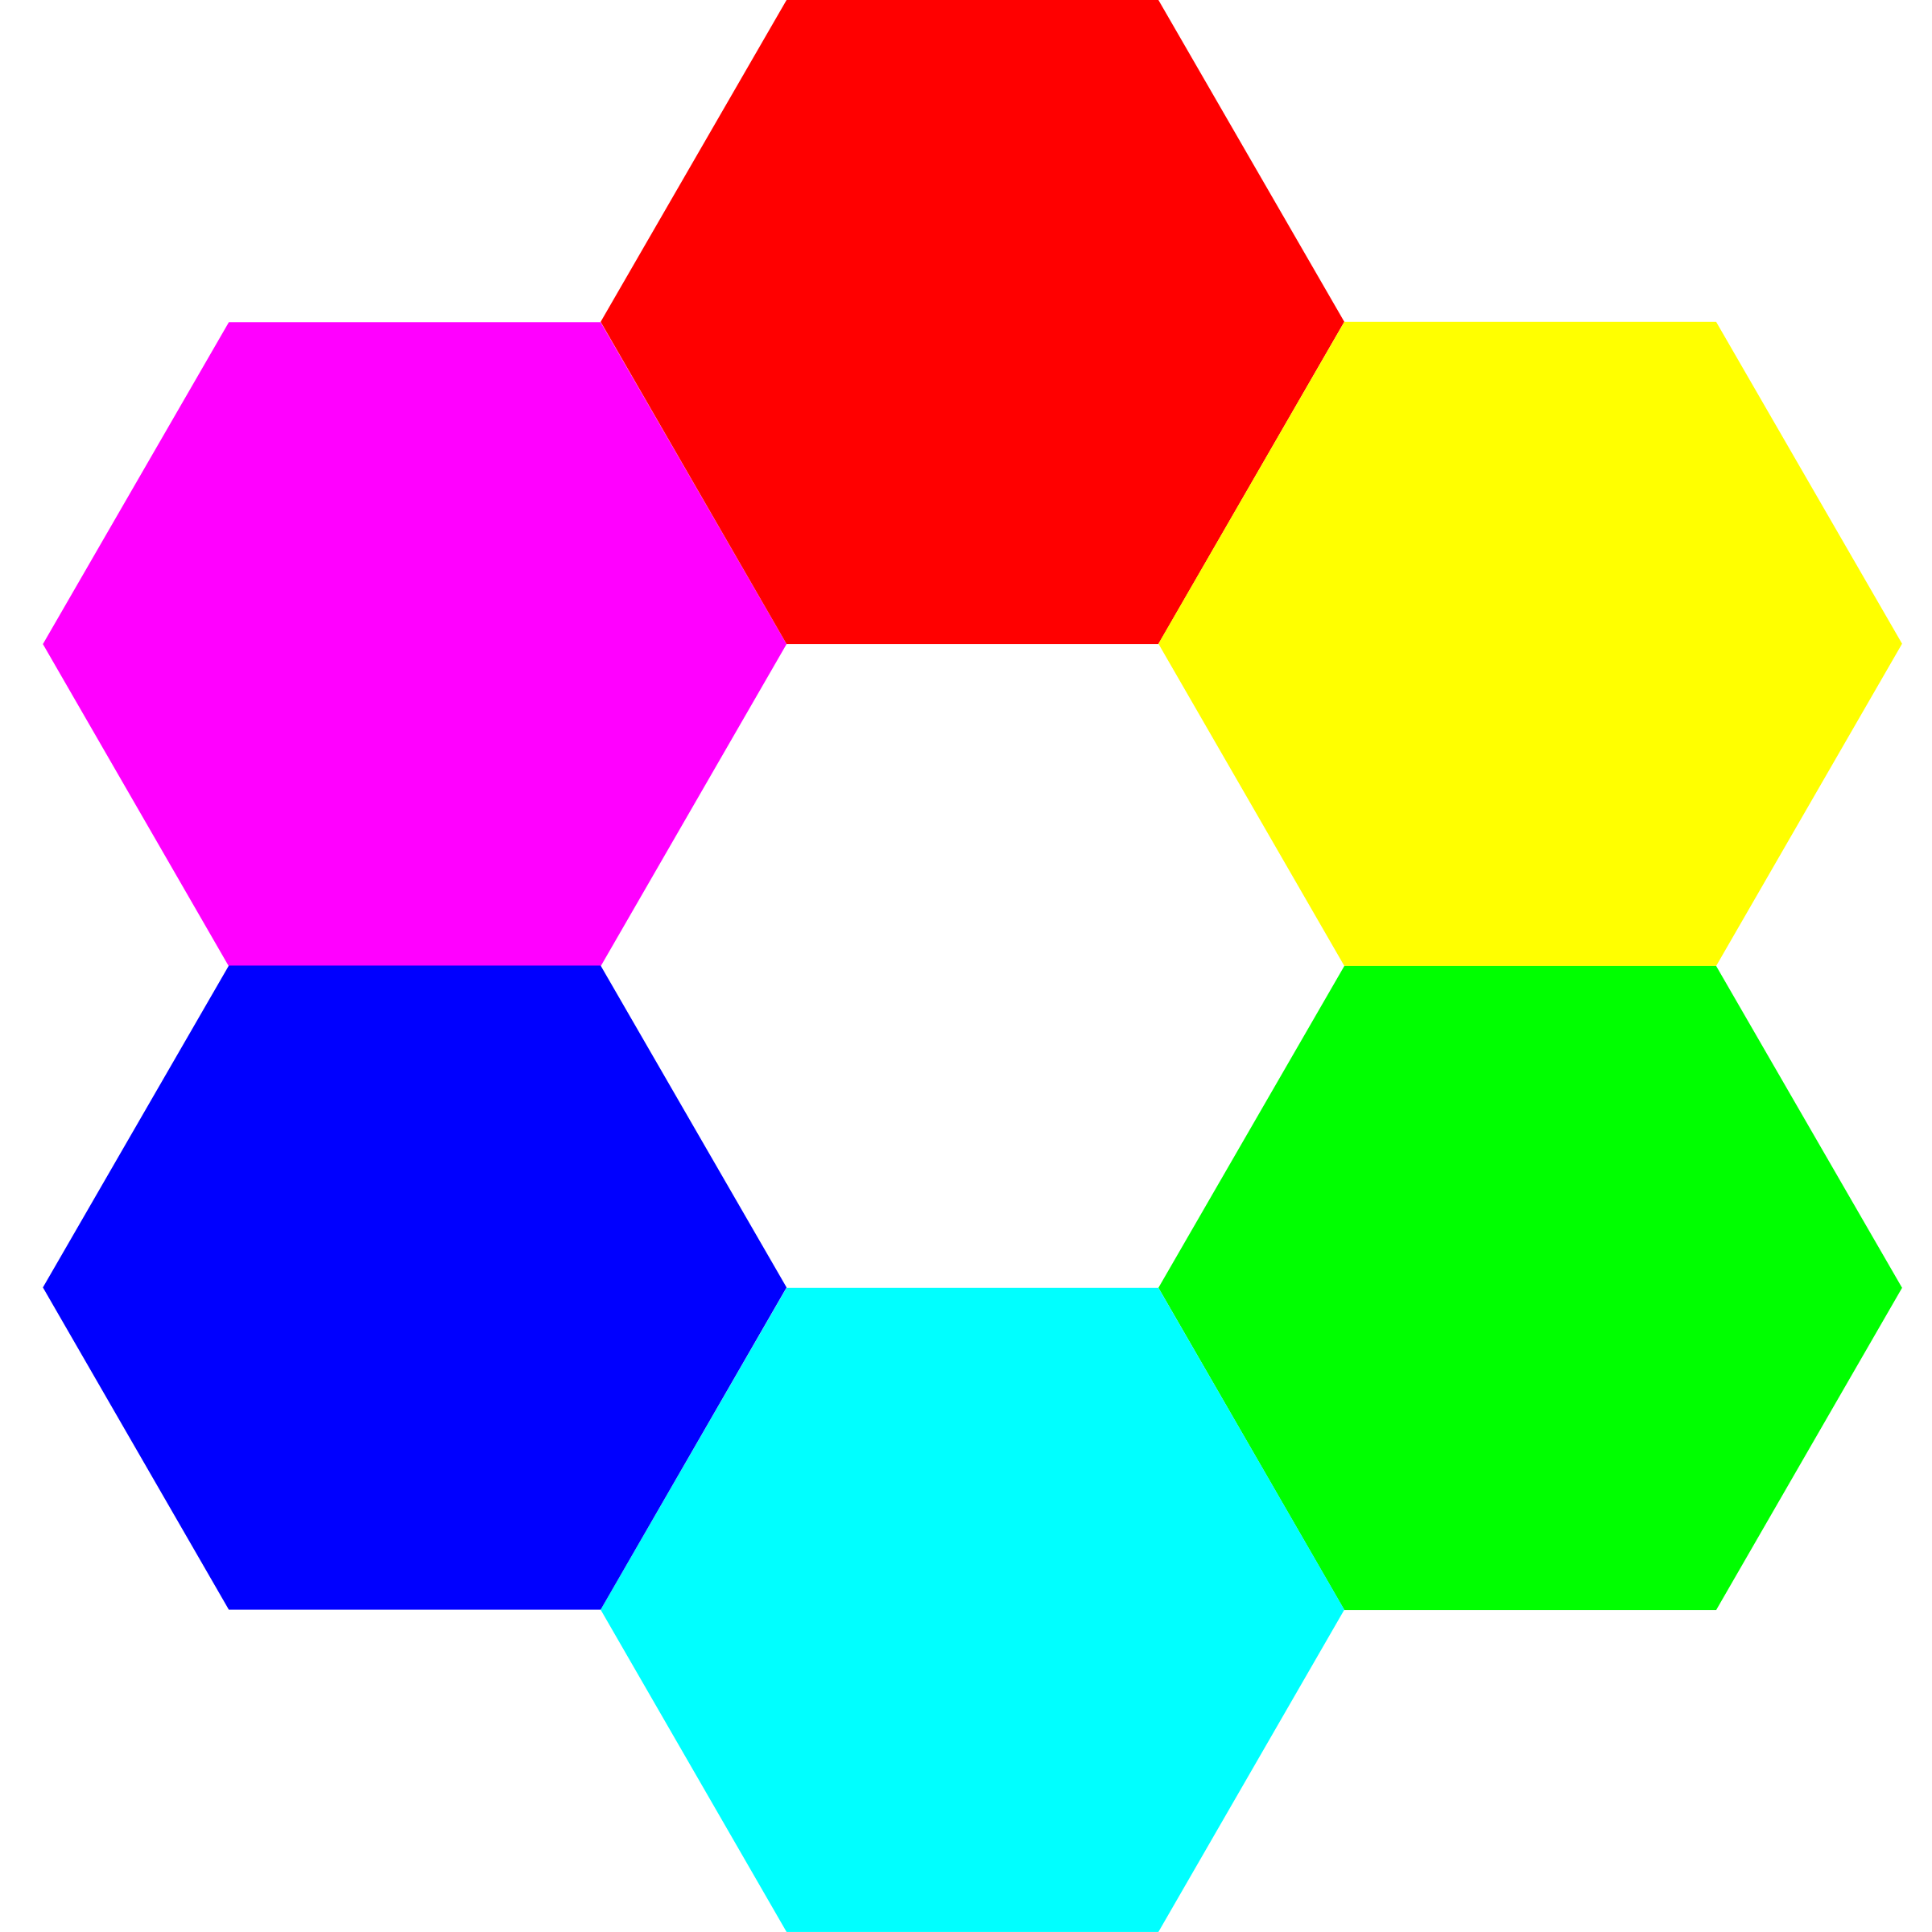 Hexagon clipart hexagonal. Color hexagons big image